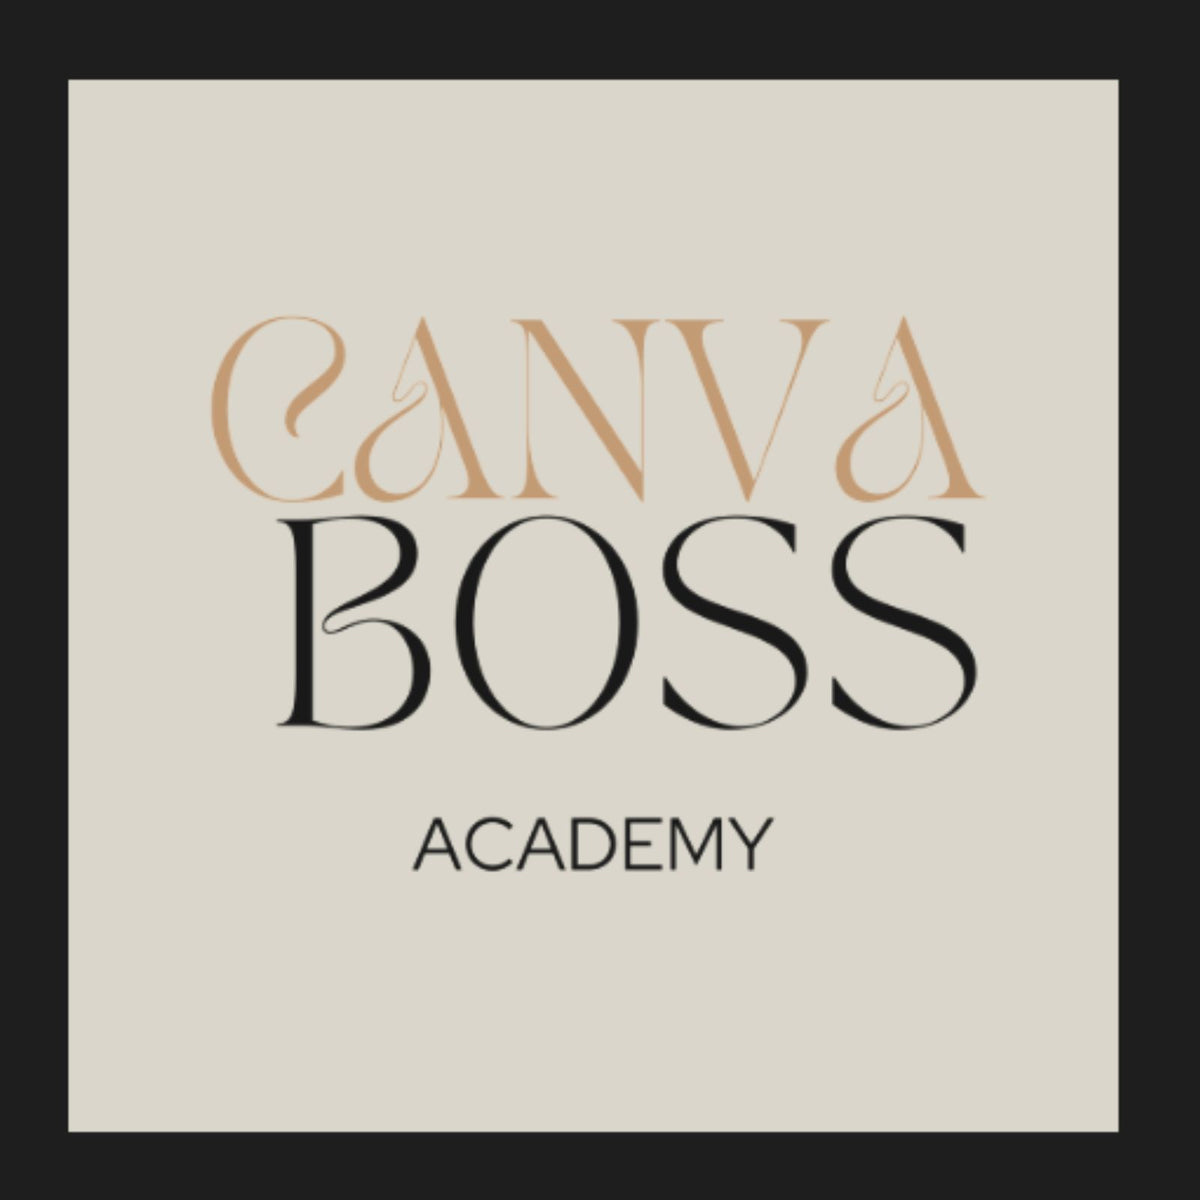 Canva Boss Academy